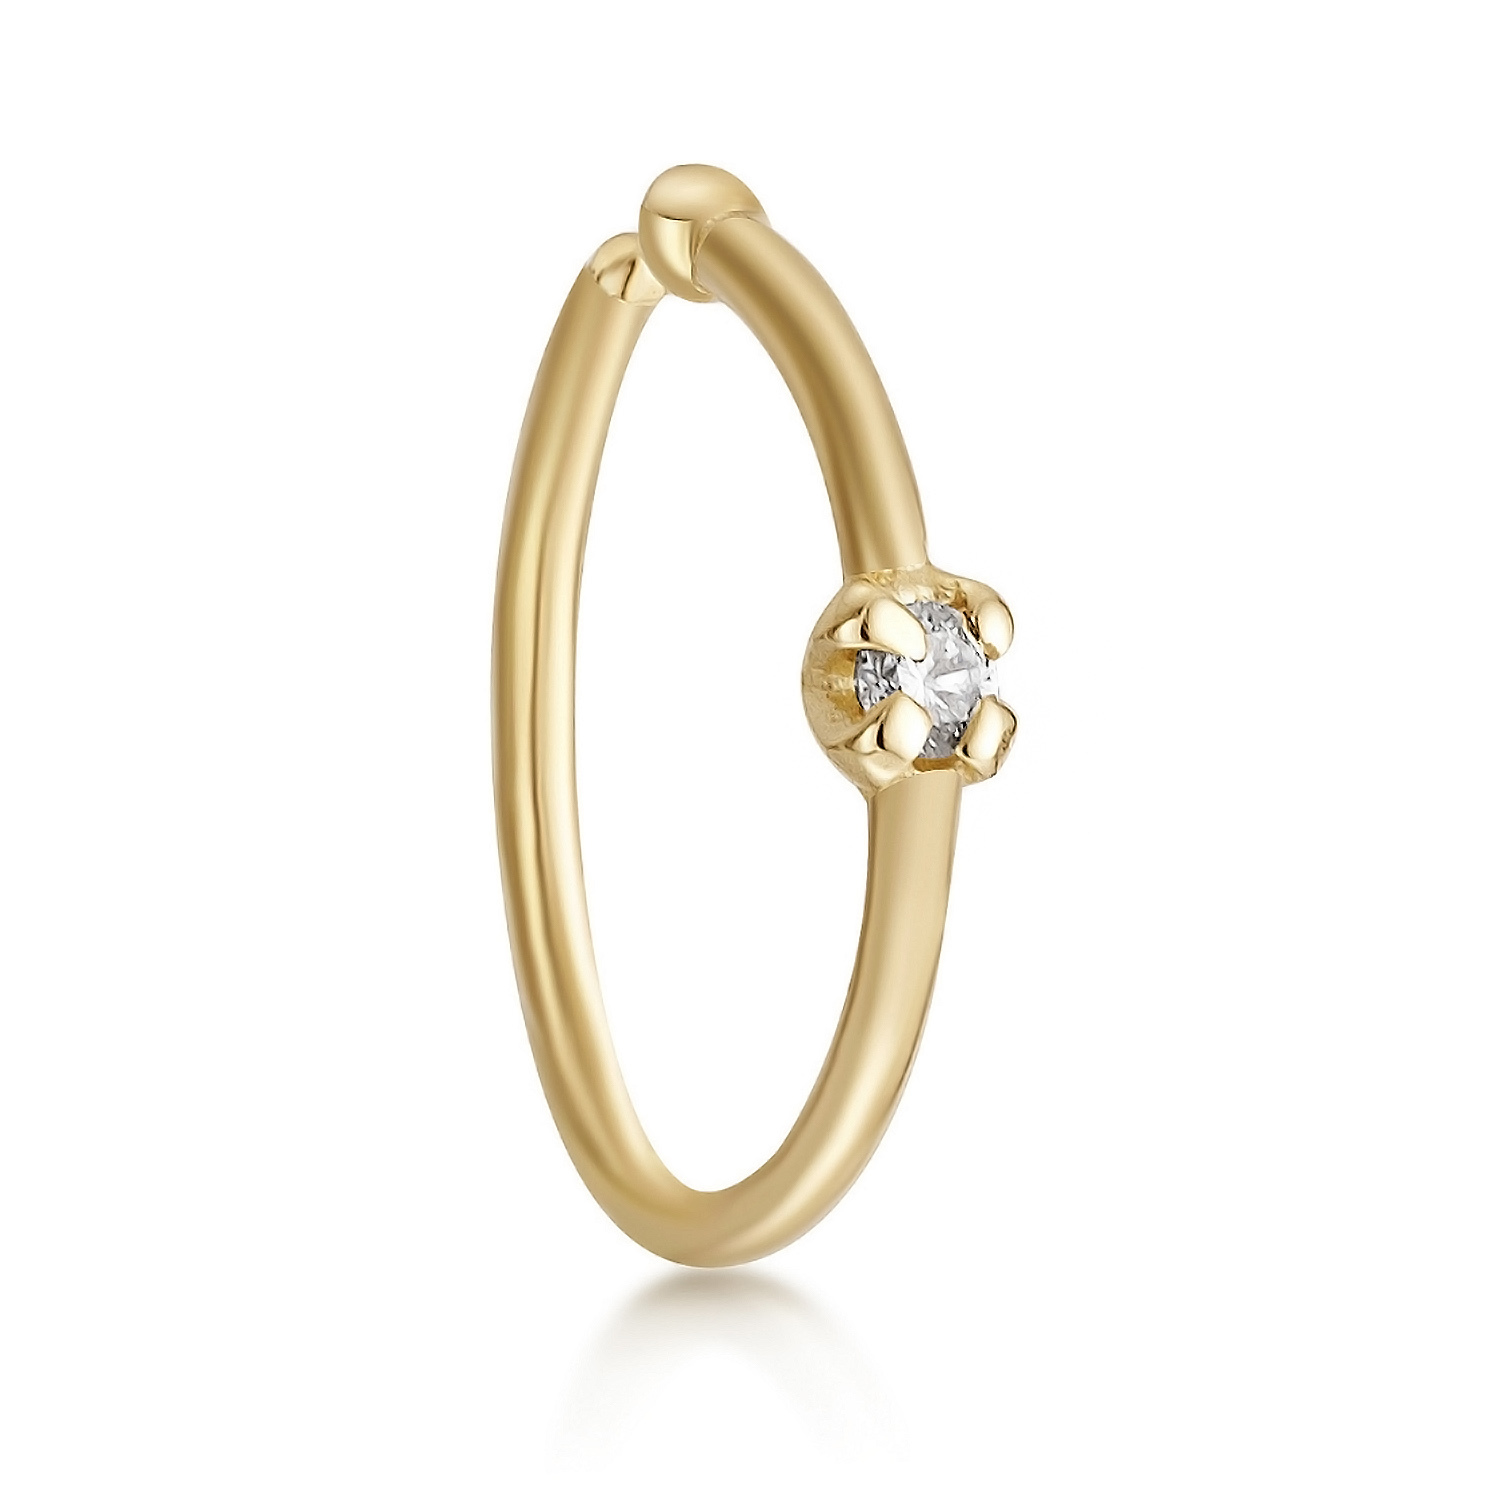 Lavari Jewelers Women's Diamond Hoop Nose Ring, 14K Yellow Gold, .01 Carat, 22 Gauge, 1.3 MM